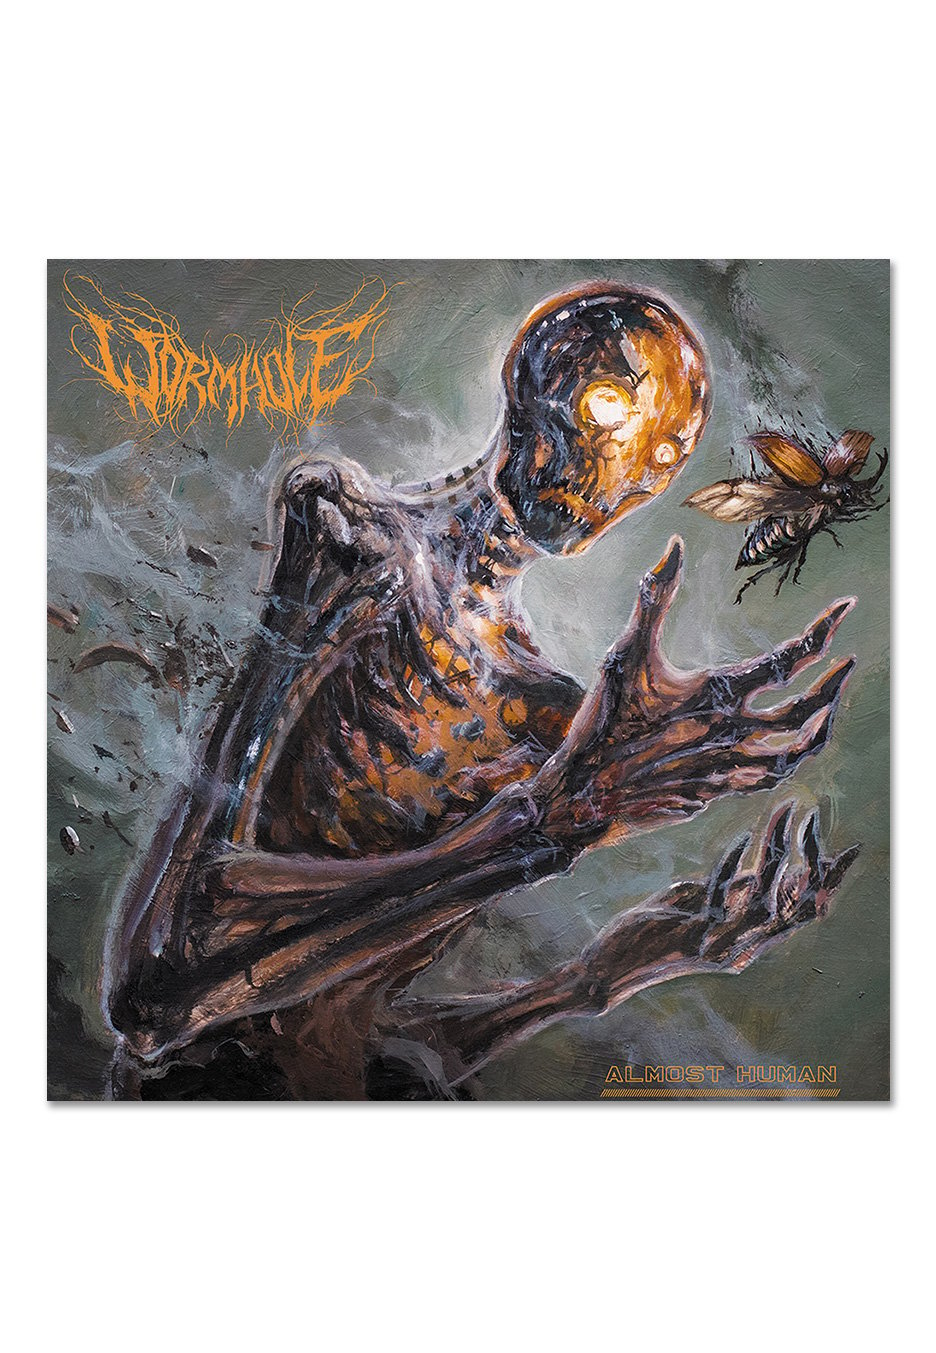 Wormhole - Almost Human Ltd. Orange - Colored Vinyl